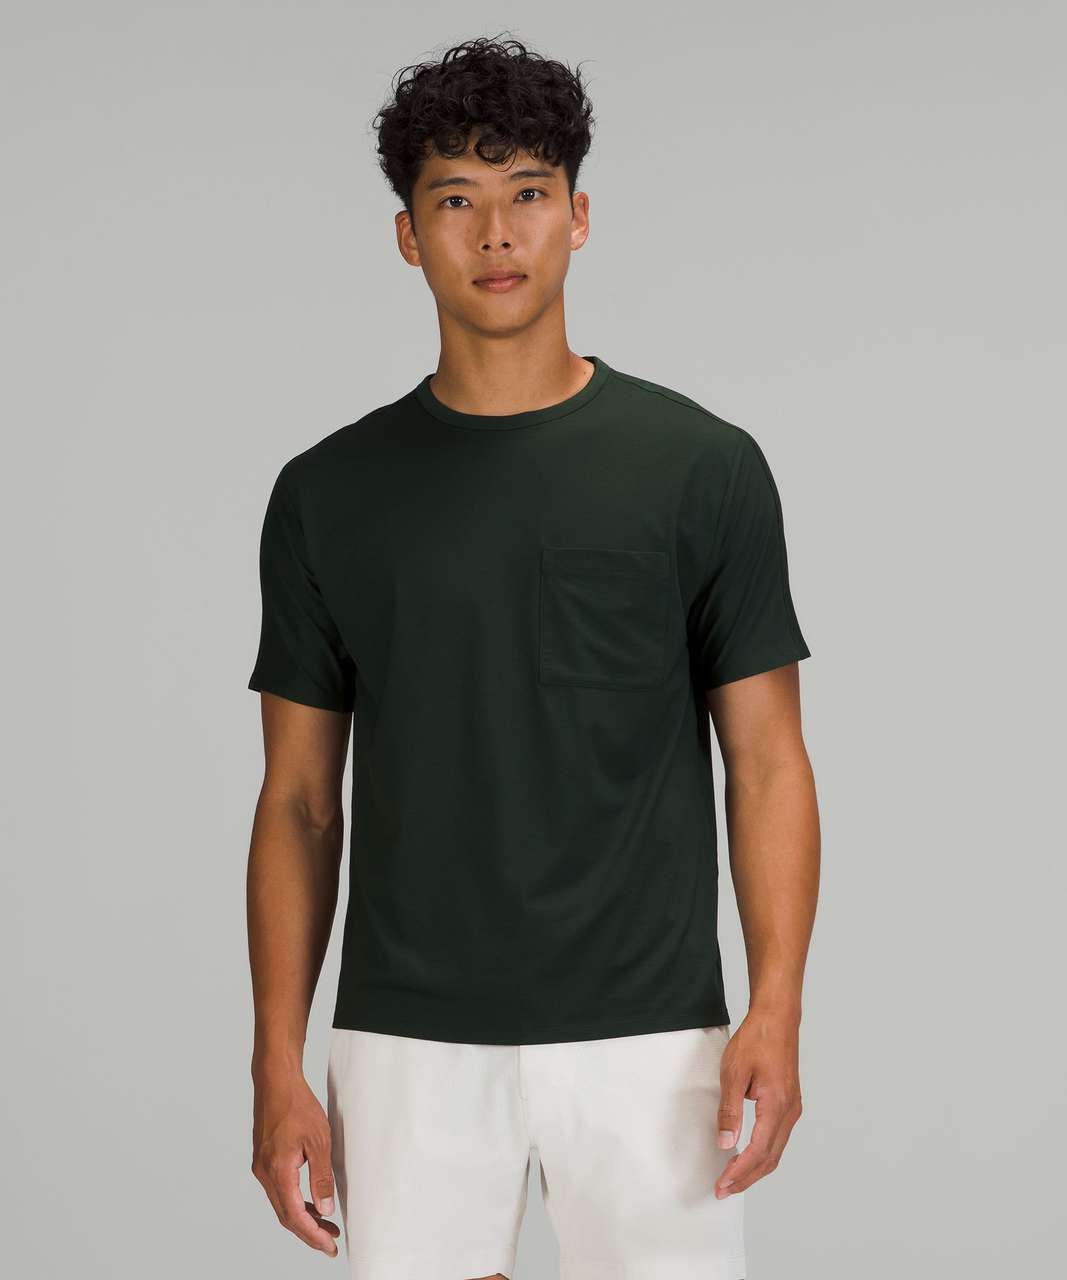 Lululemon The Fundamental Pocket T-Shirt - Rainforest Green